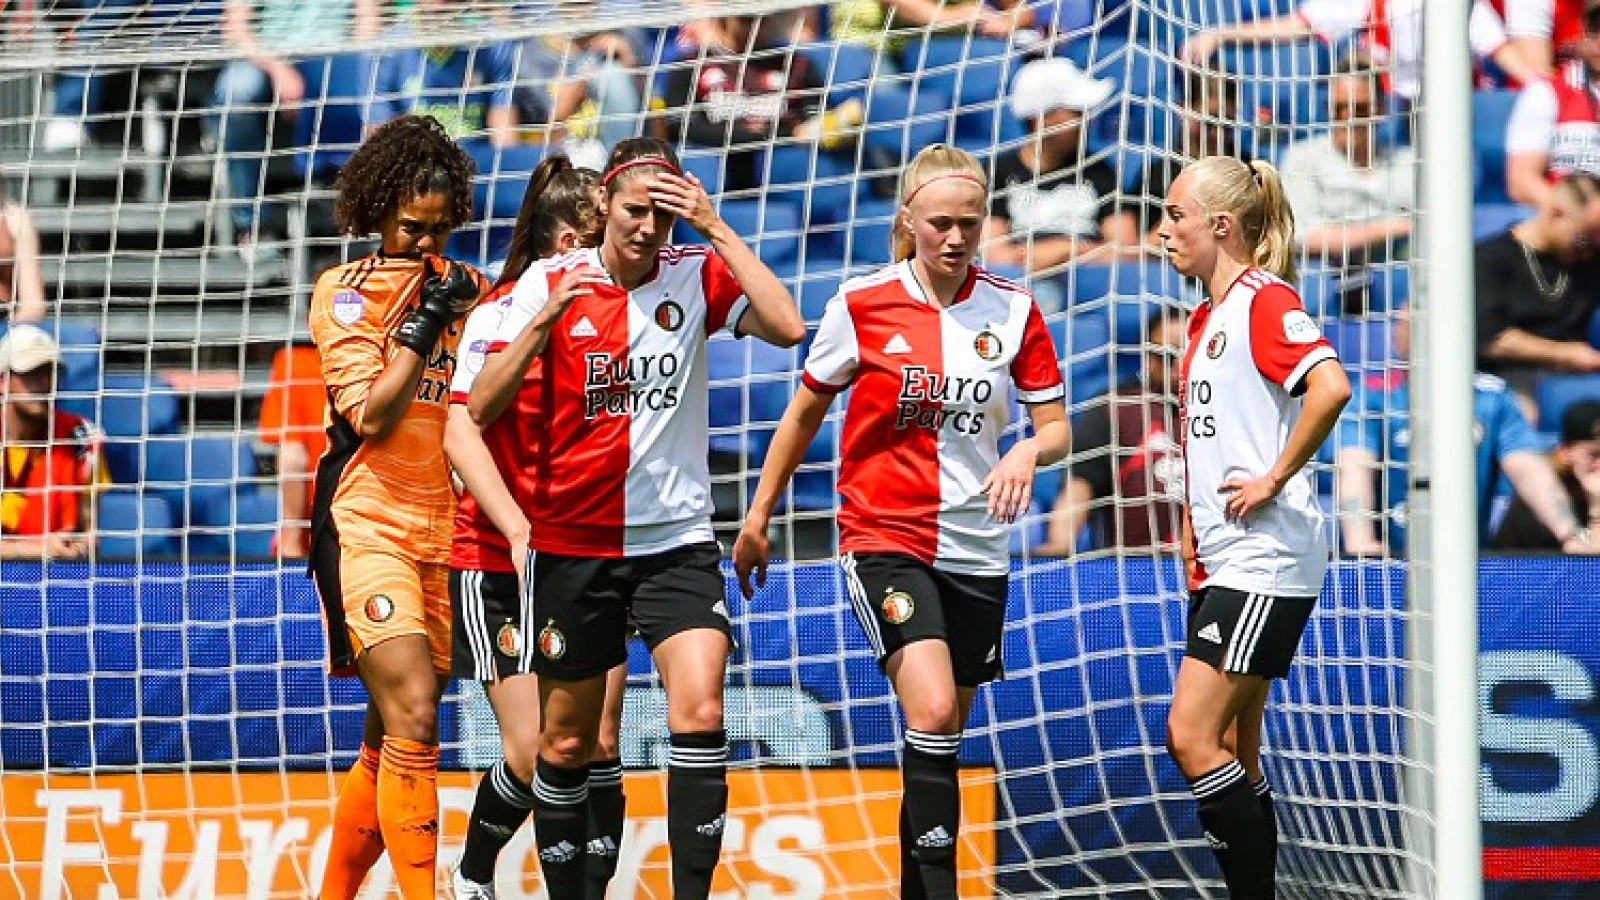 Feyenoord Vrouwen 1 wint nipt van Fortuna Sittard Vrouwen